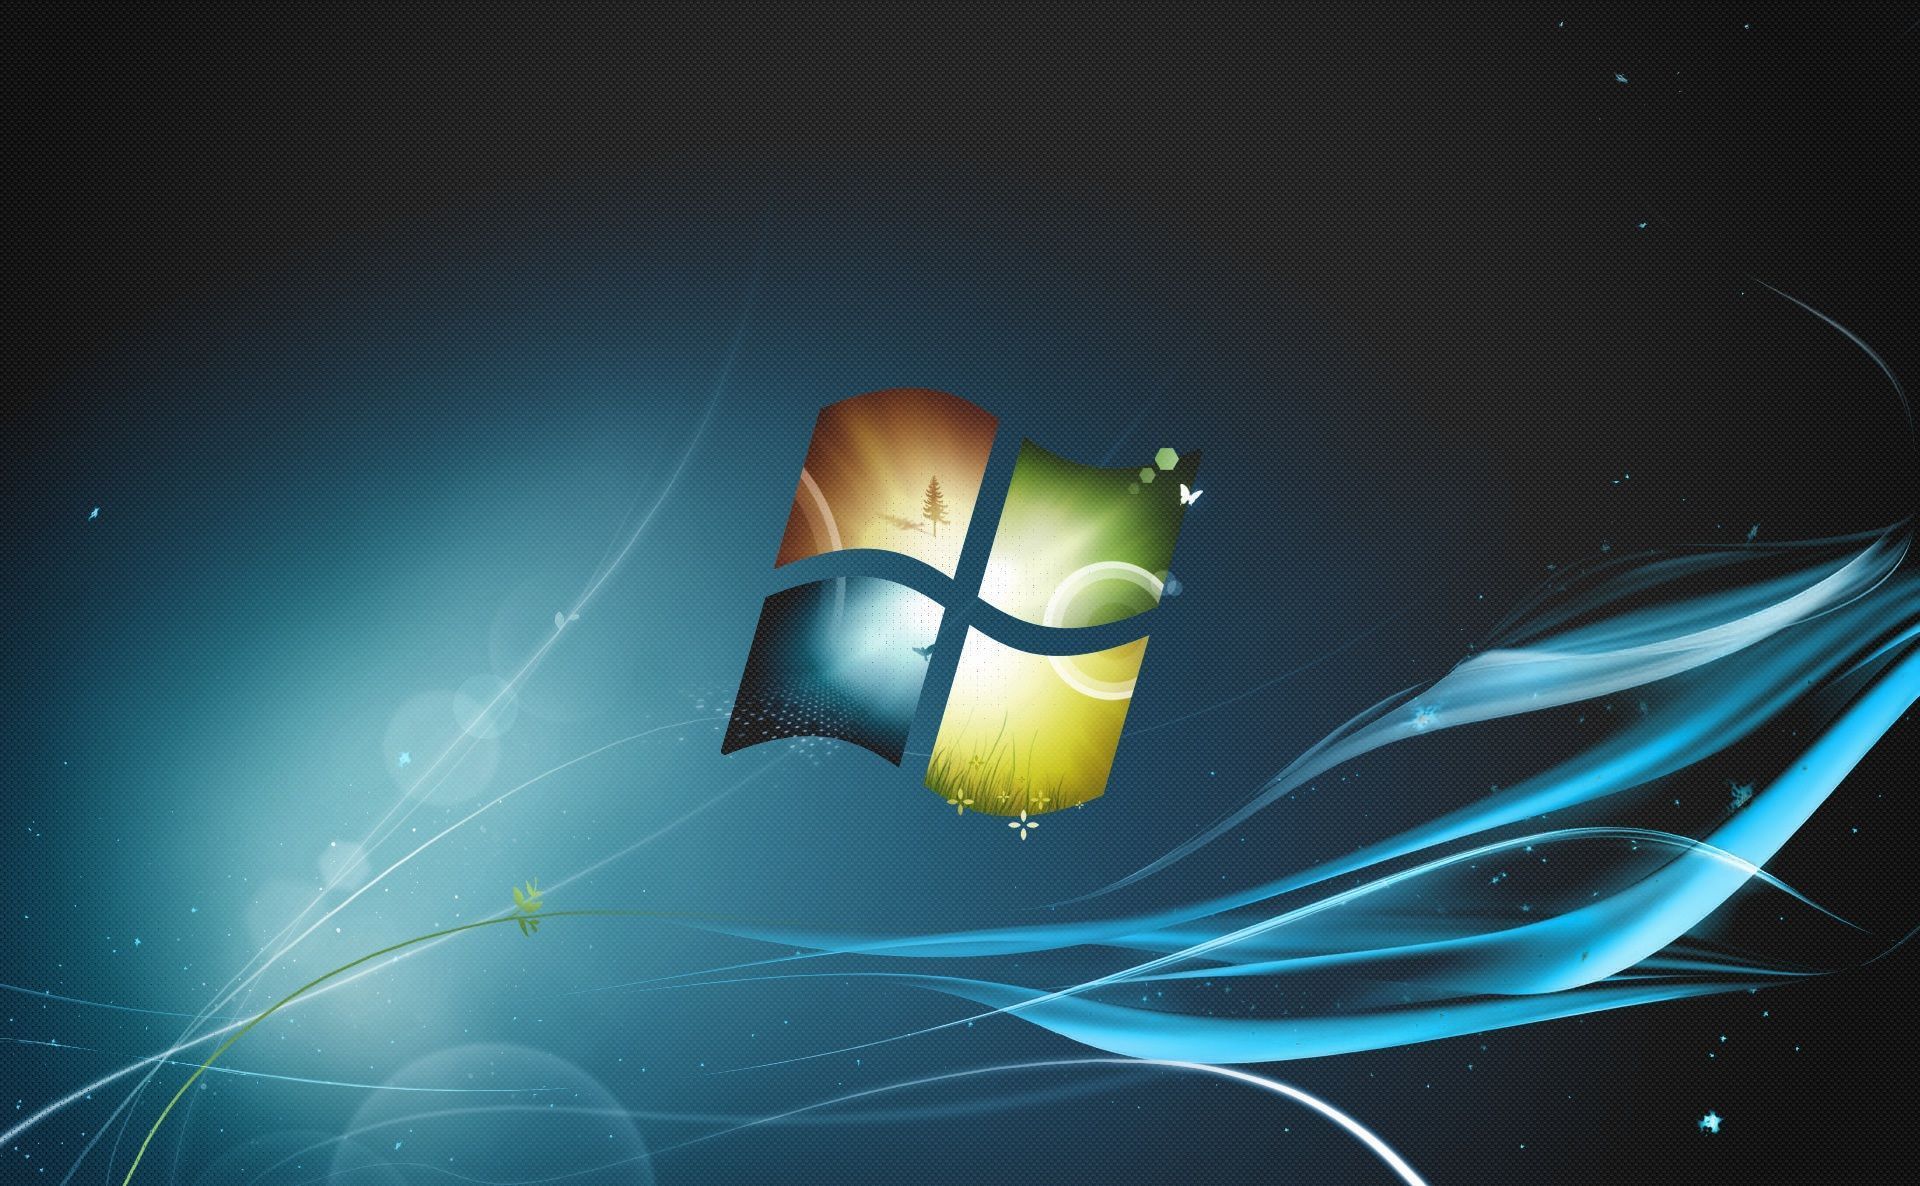 Latest Windows 7 Free HD Wallpapers Download Free Desktop